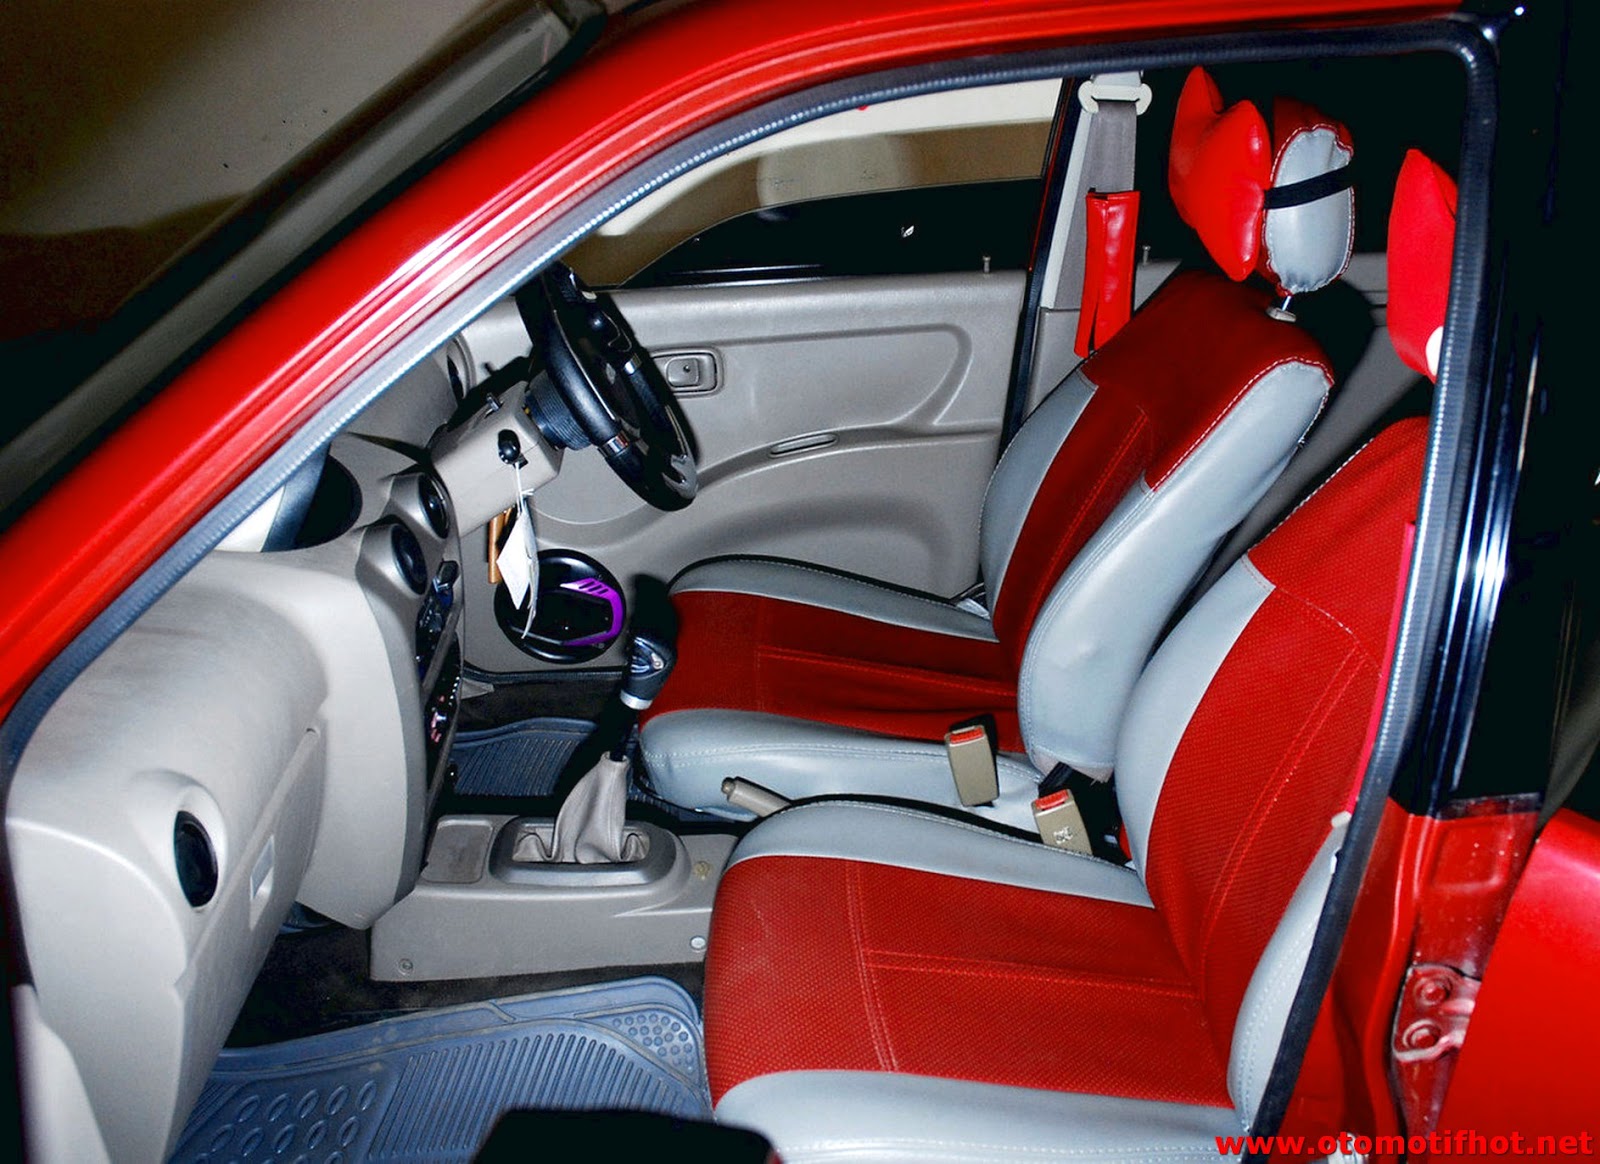 990+ Gambar Interior Mobil Daihatsu Sigra HD Terbaru